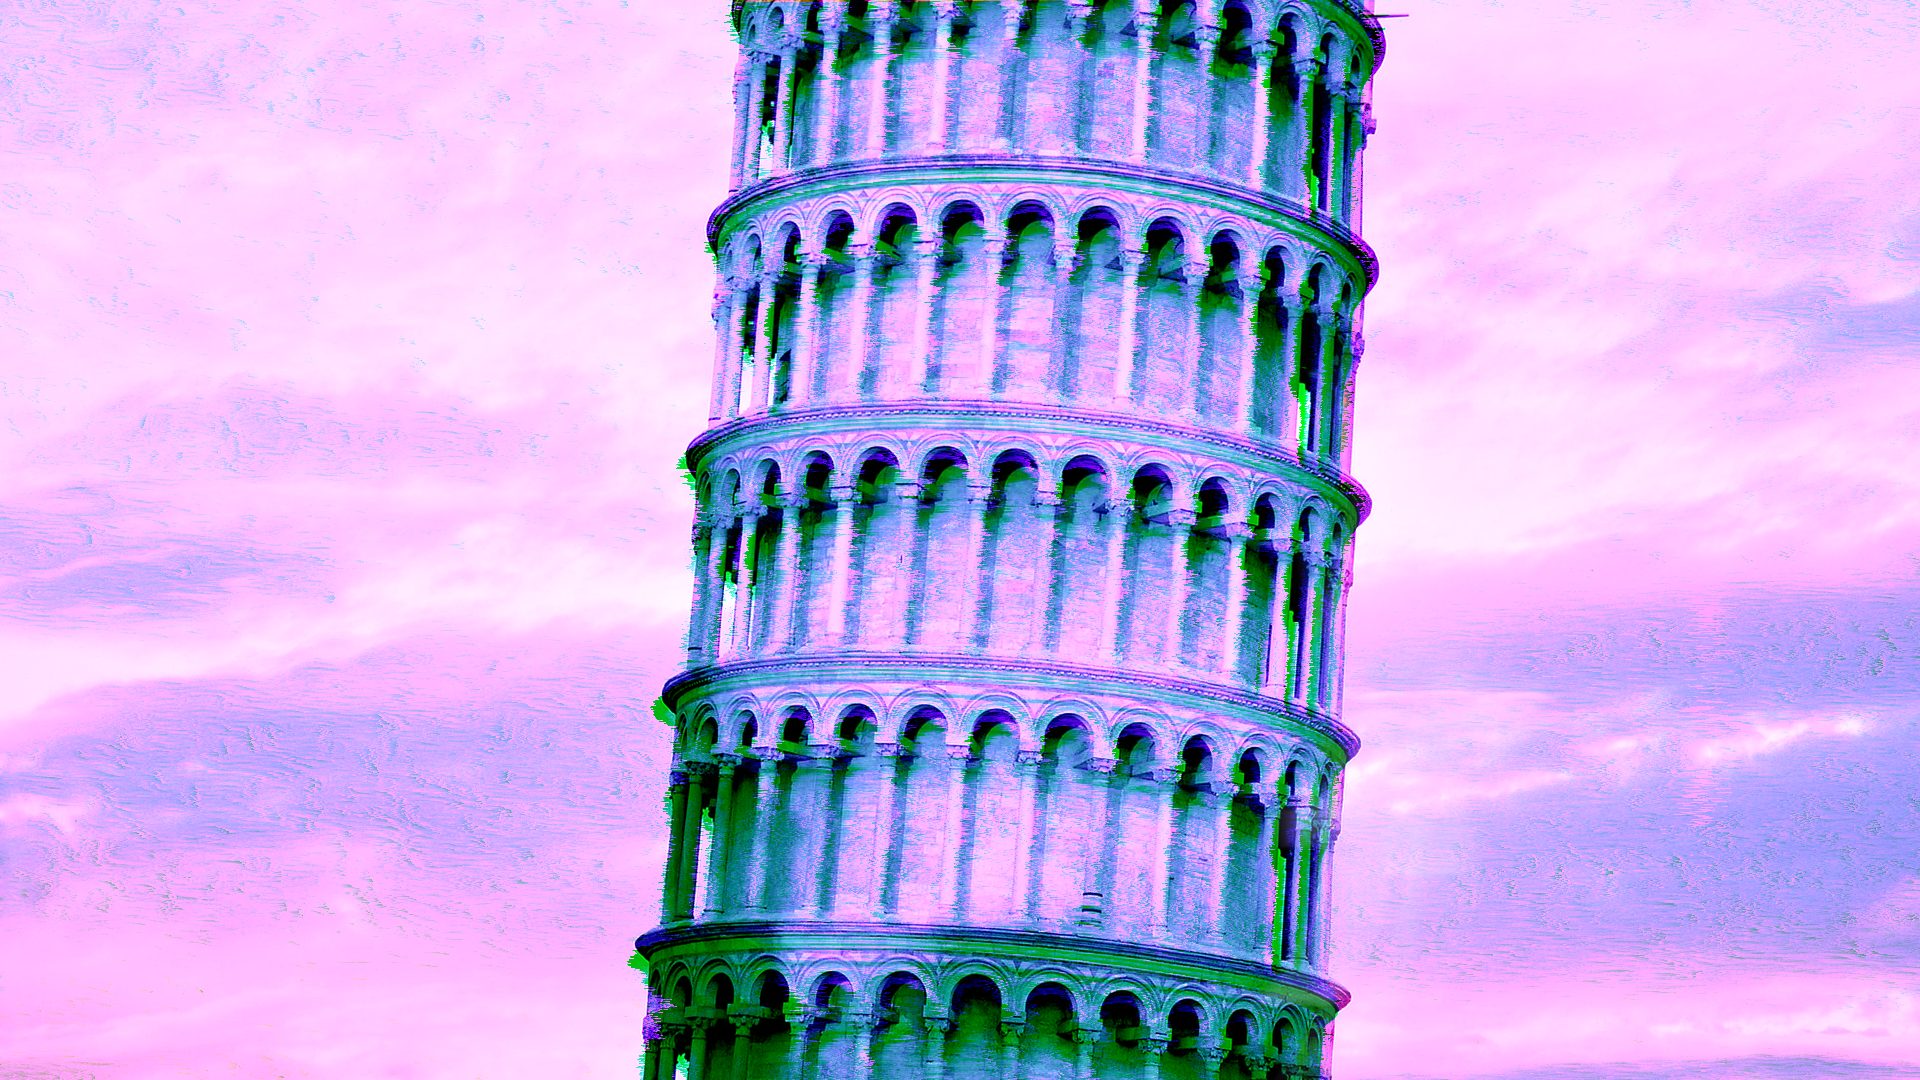 Glitch Art Leaning Tower Of Pisa Magenta Vaporwave 1920x1080